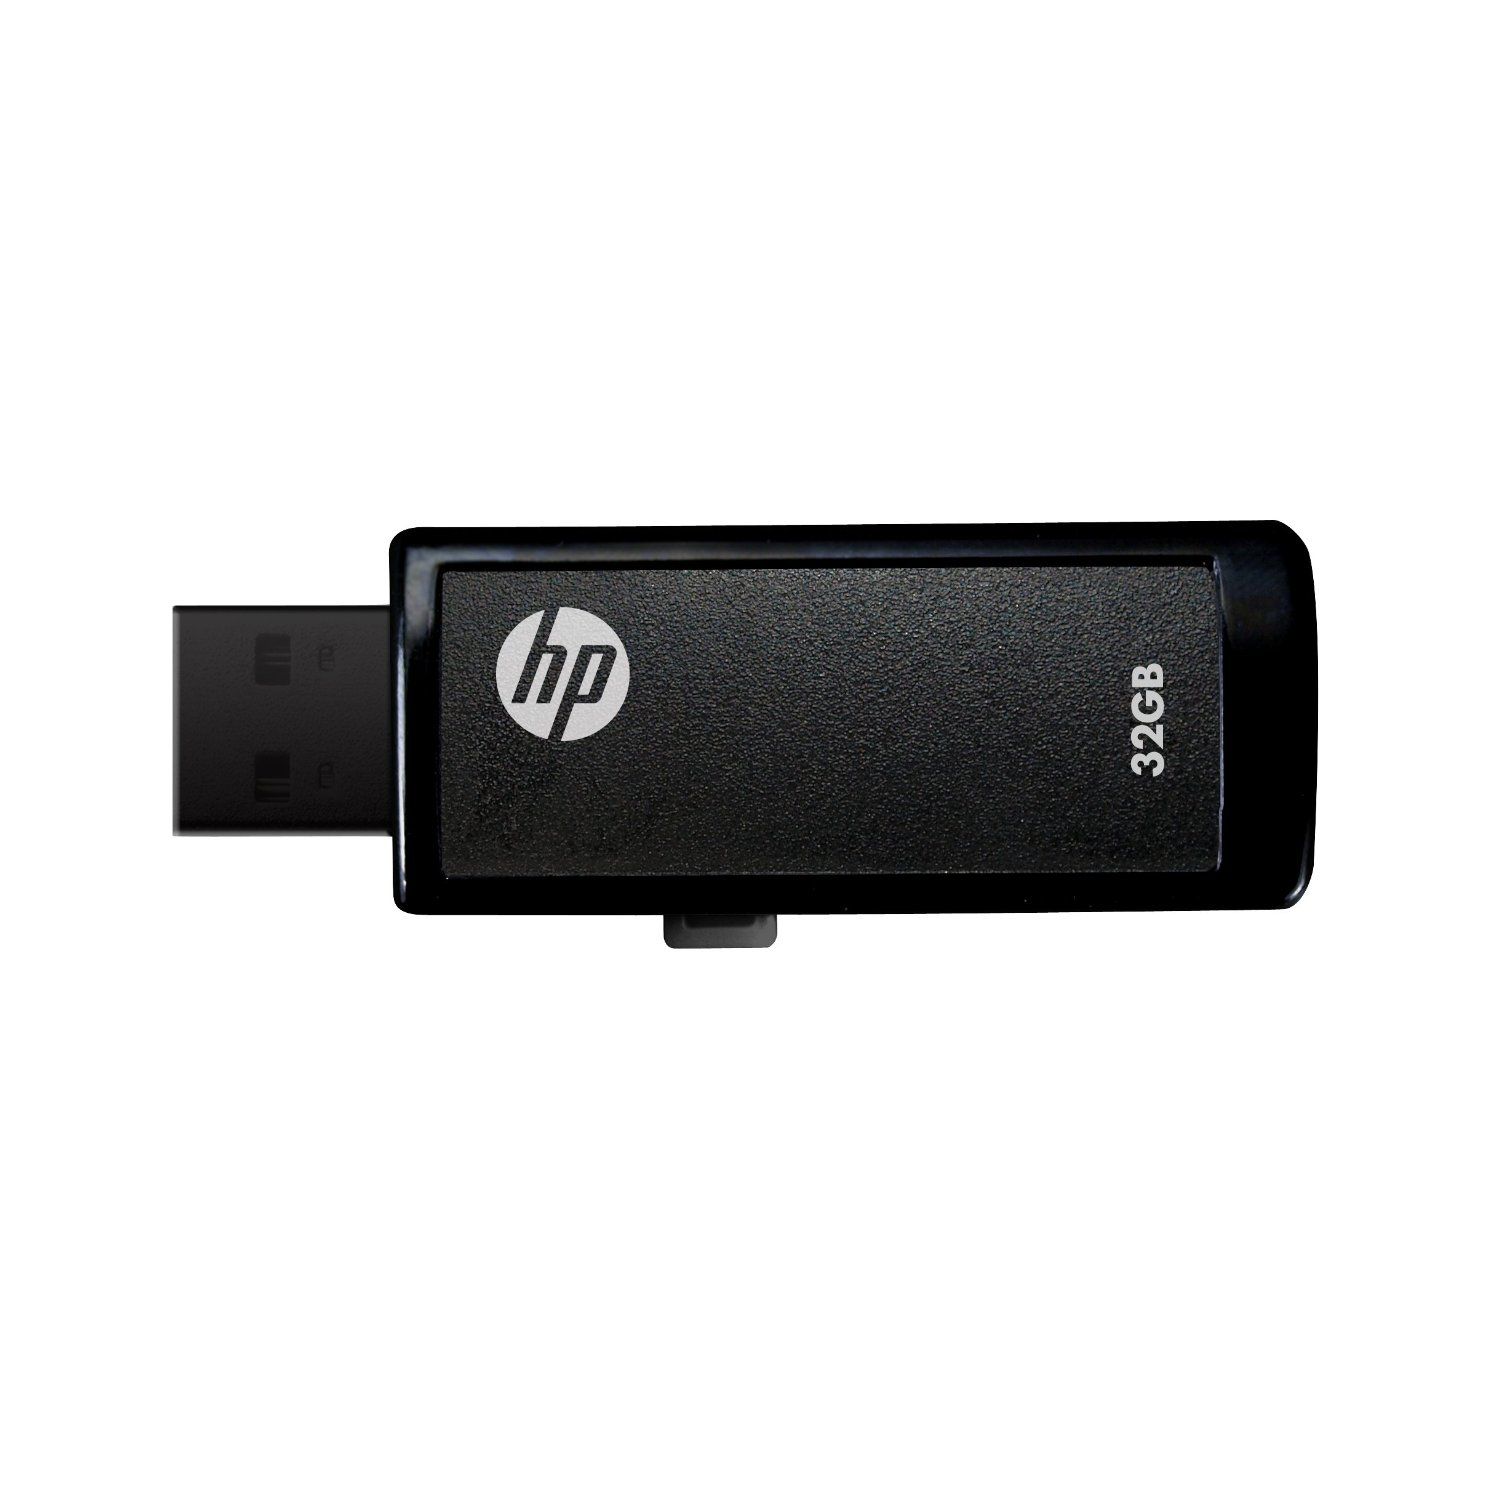 HP 32GB USB Flash Drive v255w, Capless, Retractable BLACK NEW